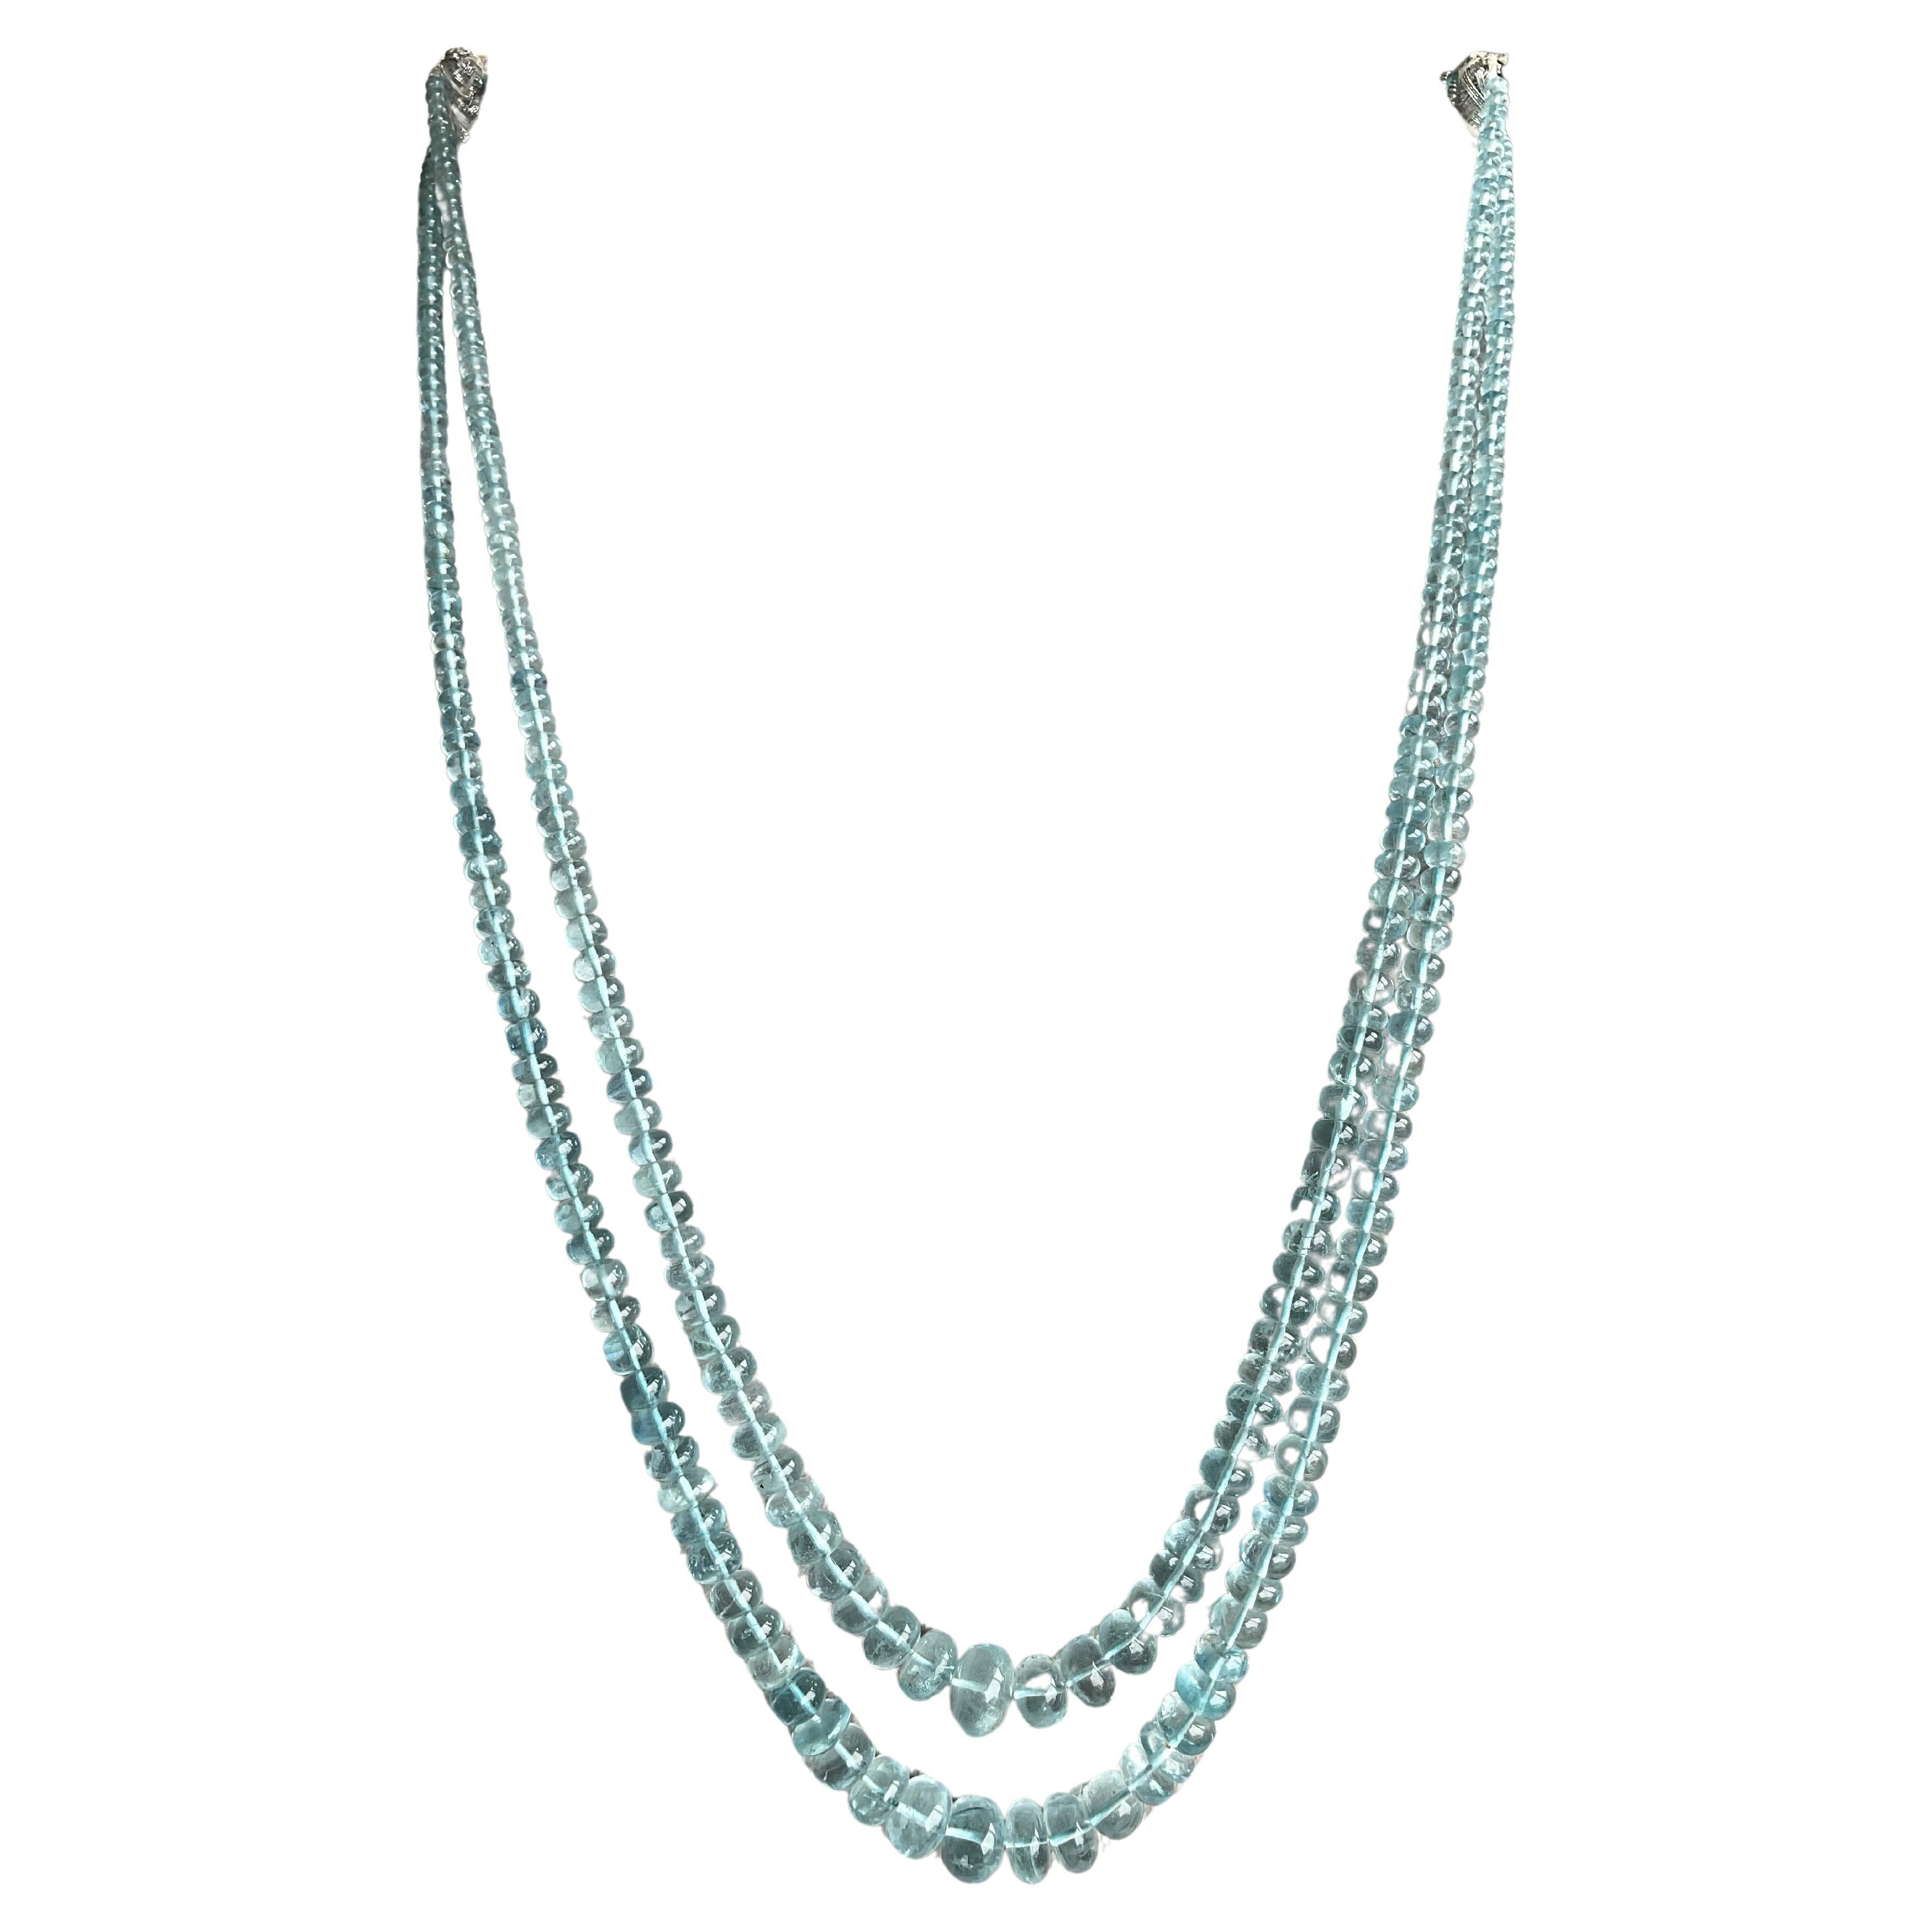 198.75 Carats Aquamarine Necklace Beads 2 Strands Top Quality Natural Gemstones